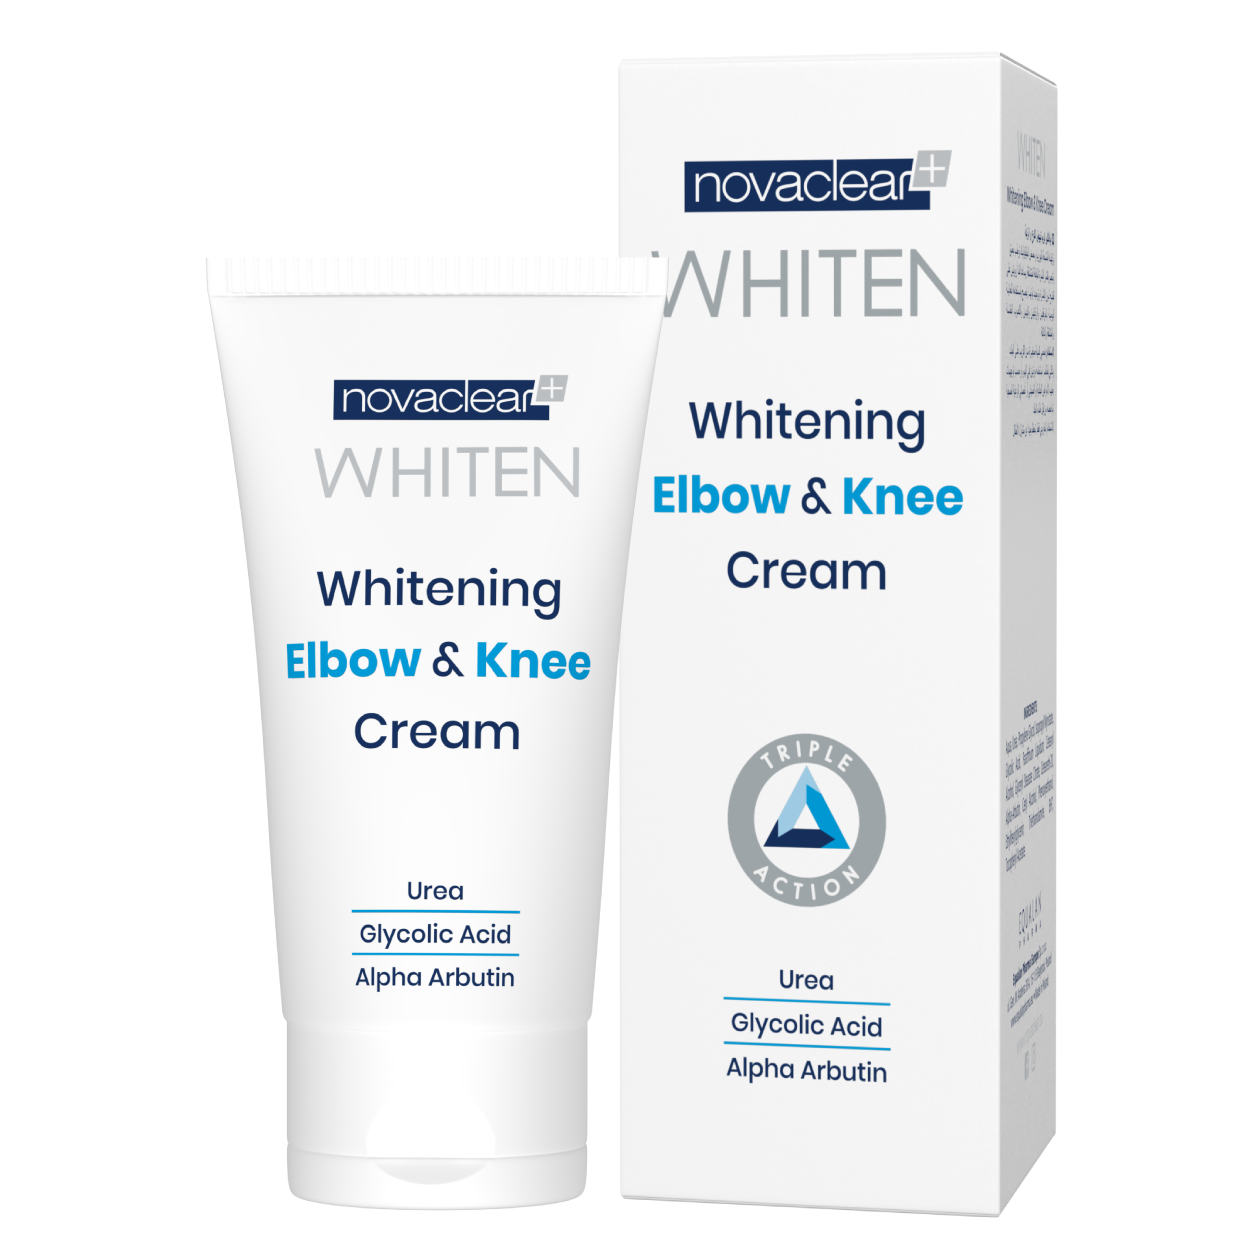 novaclear-whiten-whitening-elbow-&-knee-cream